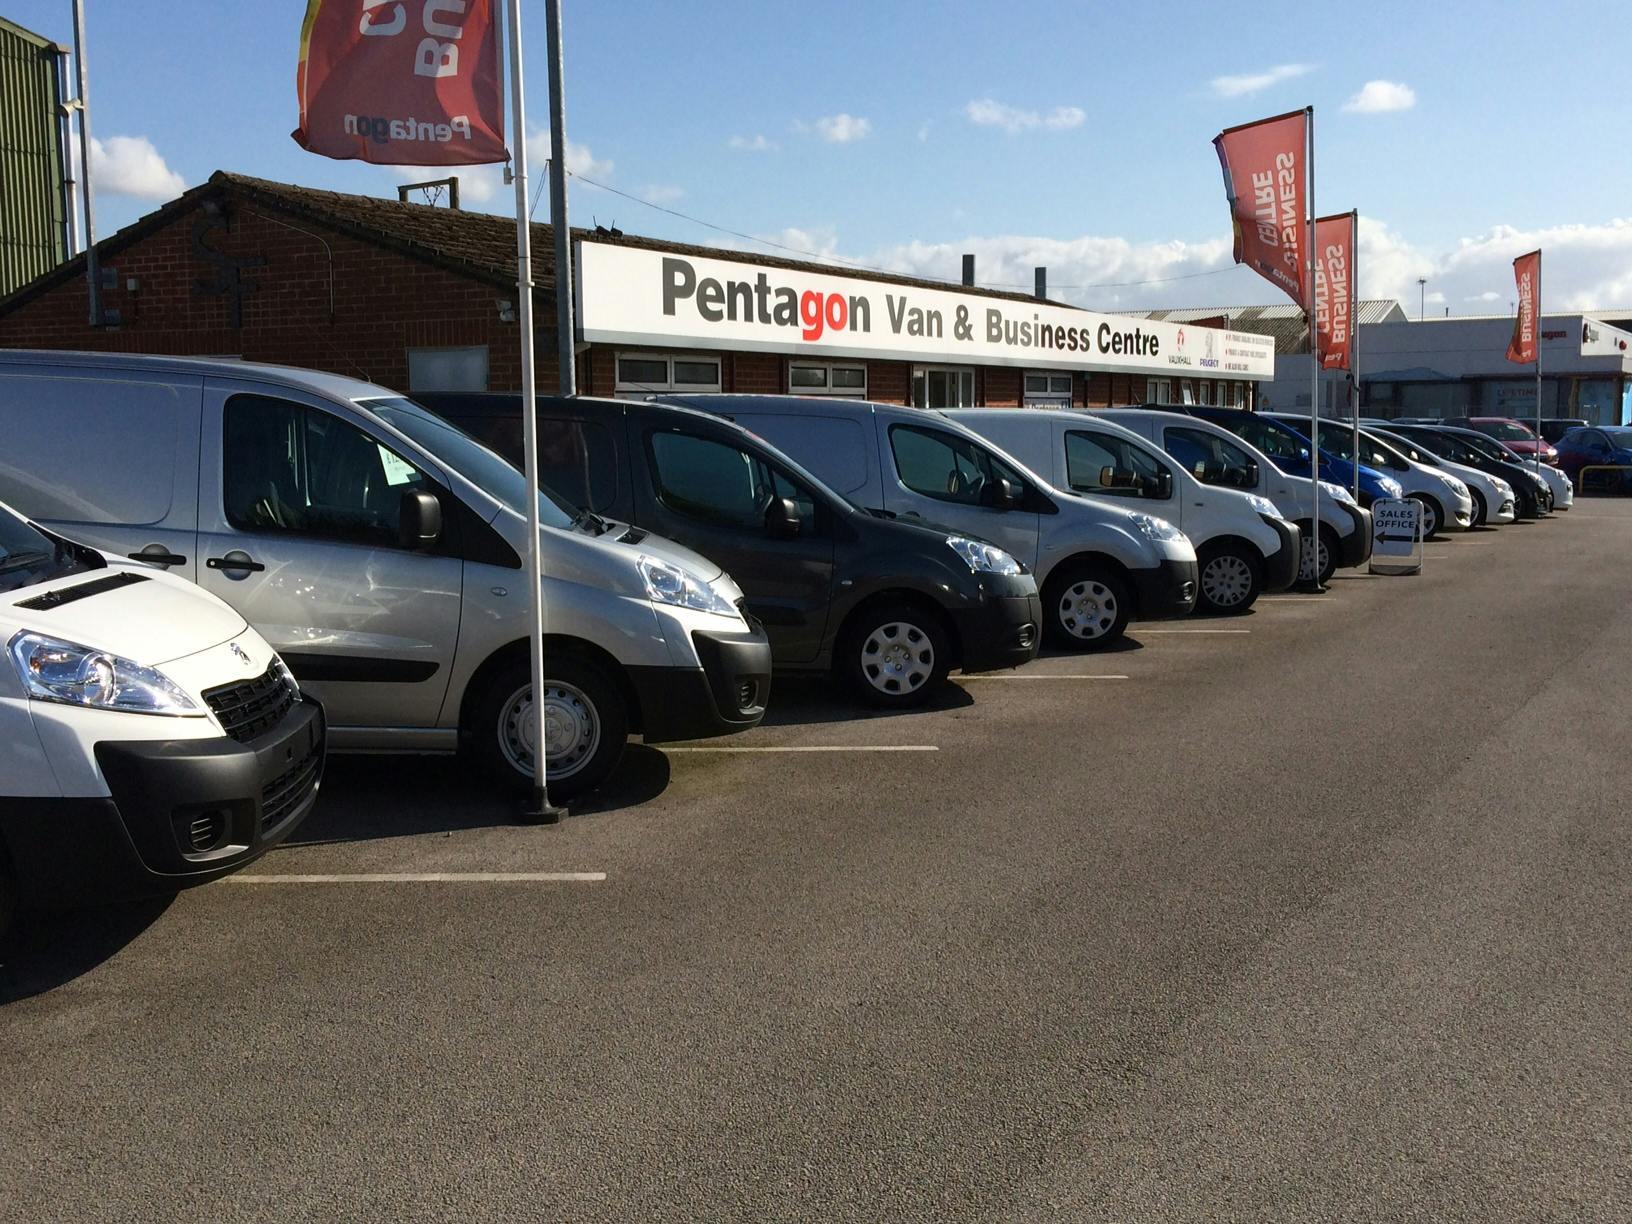 Burton-On-Trent Dealership Re-branded as Peugeot Business Centre